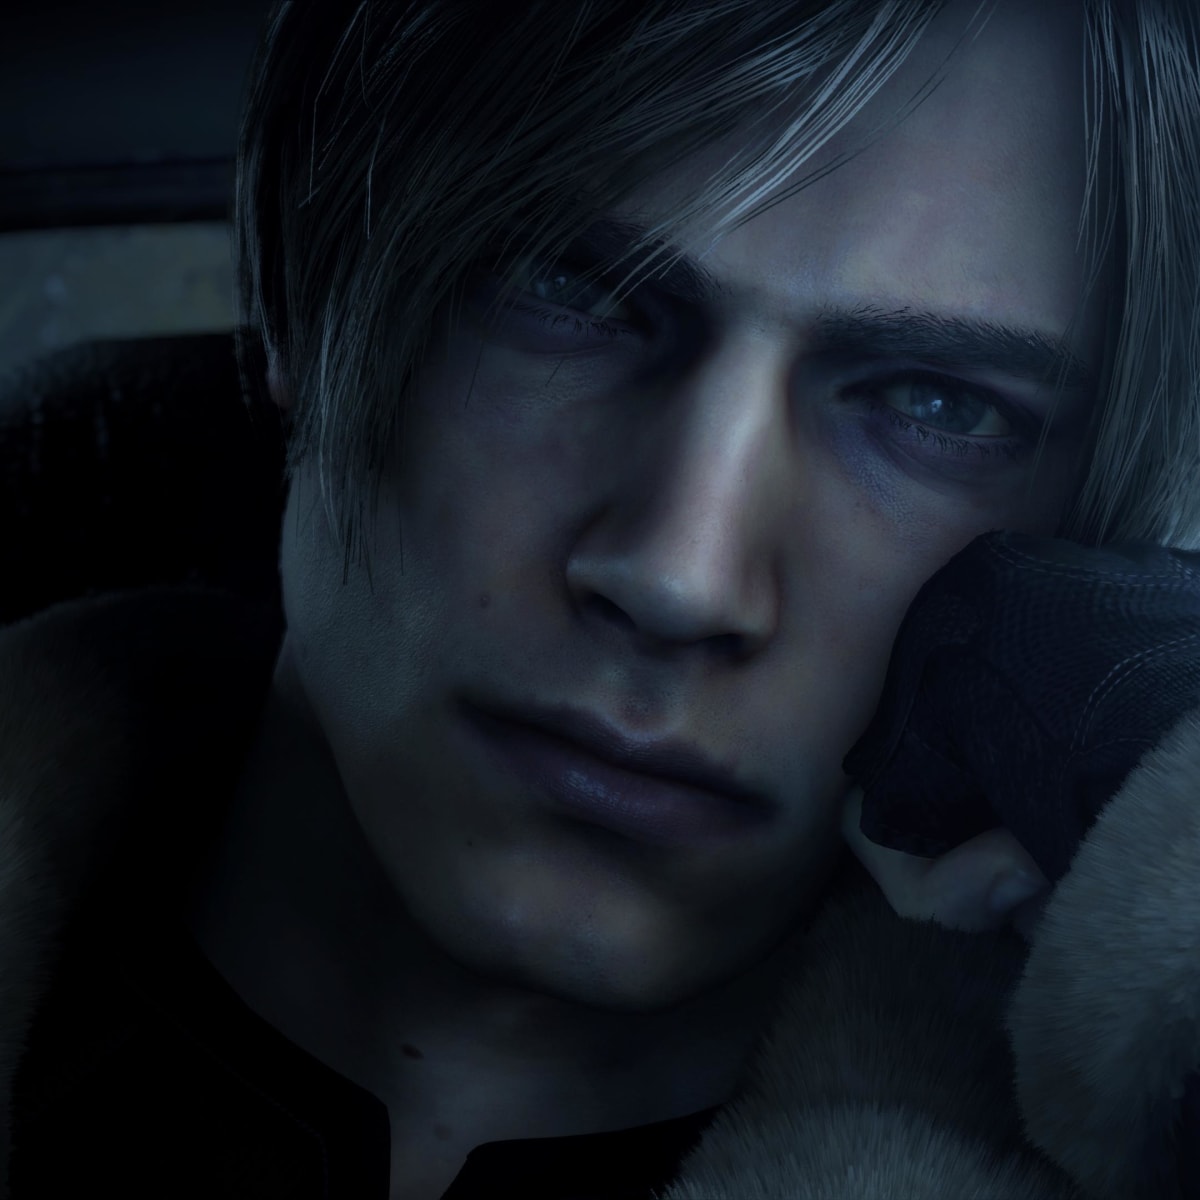 Resident Evil 4 Remake Mercenaries DLC - Release Date, Platforms, & Price